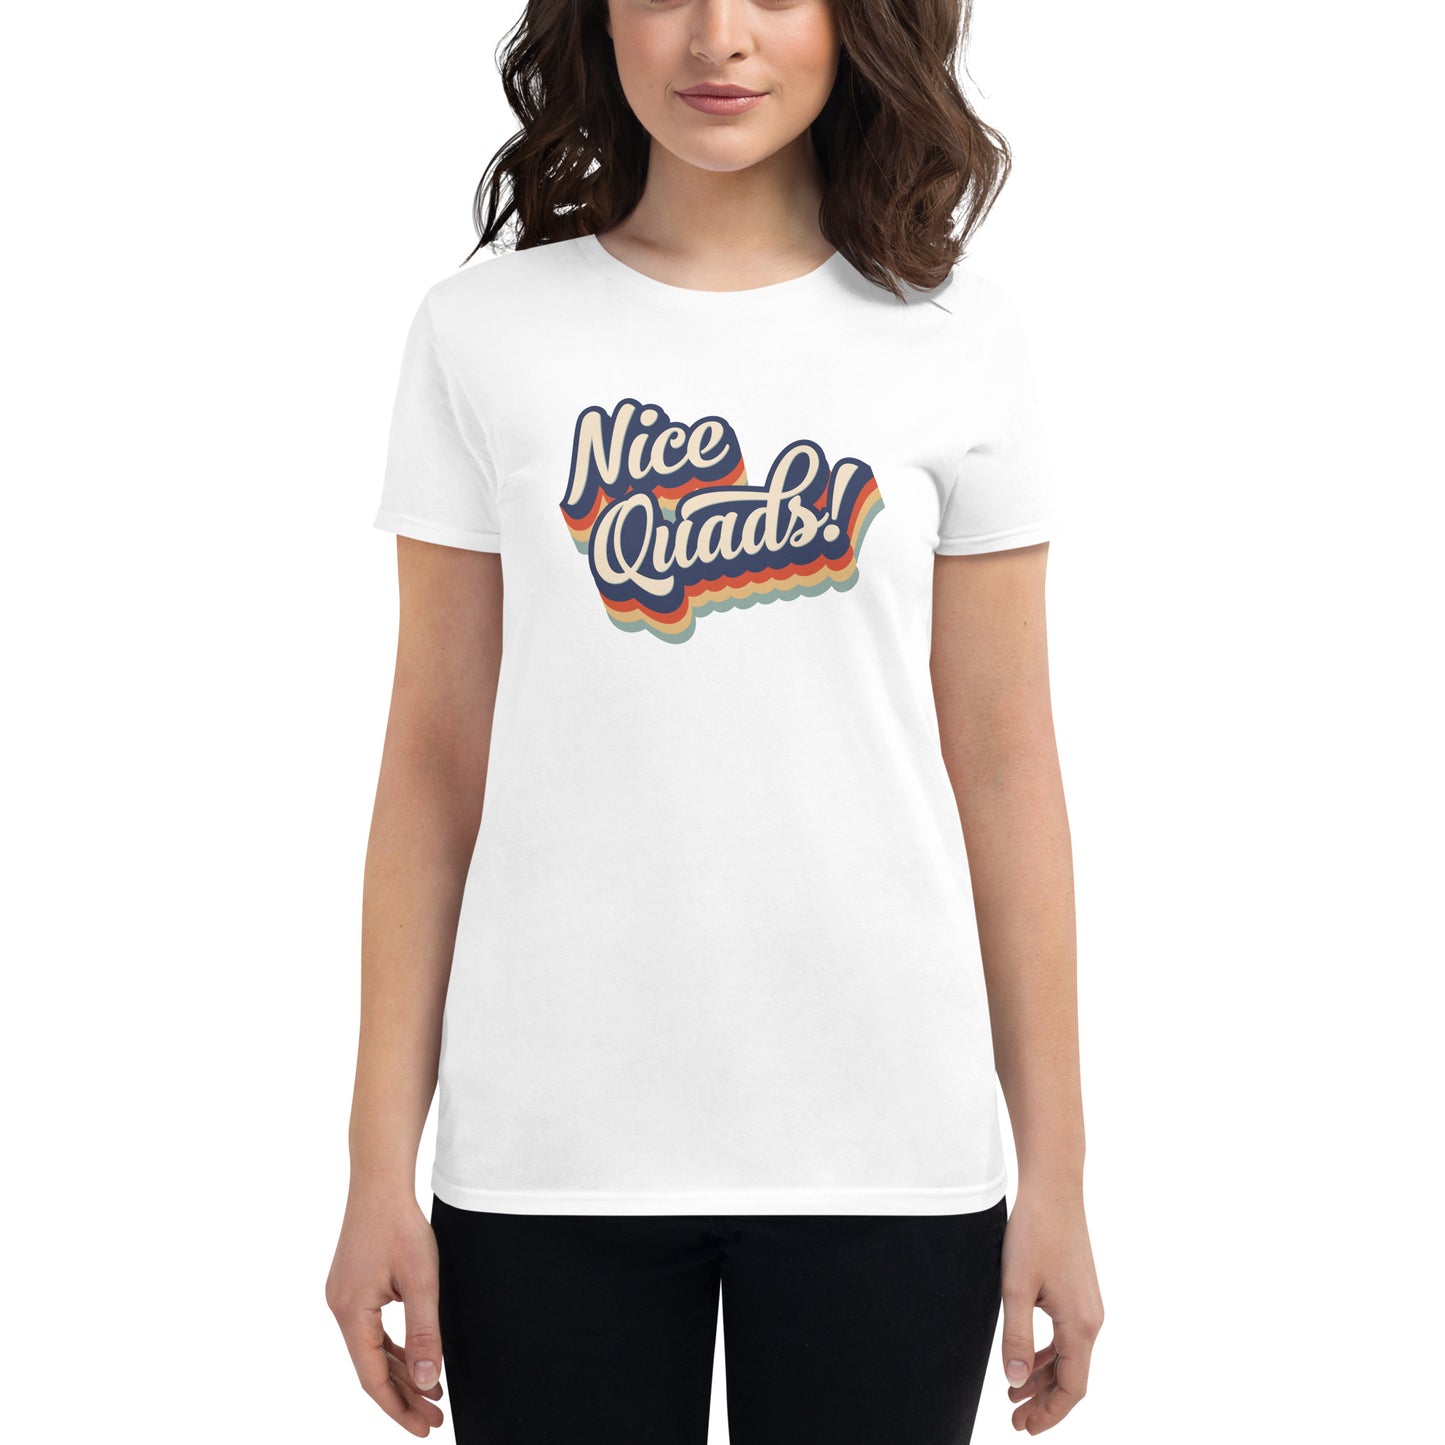 "Nice Quads" women's roller skate t-shirt